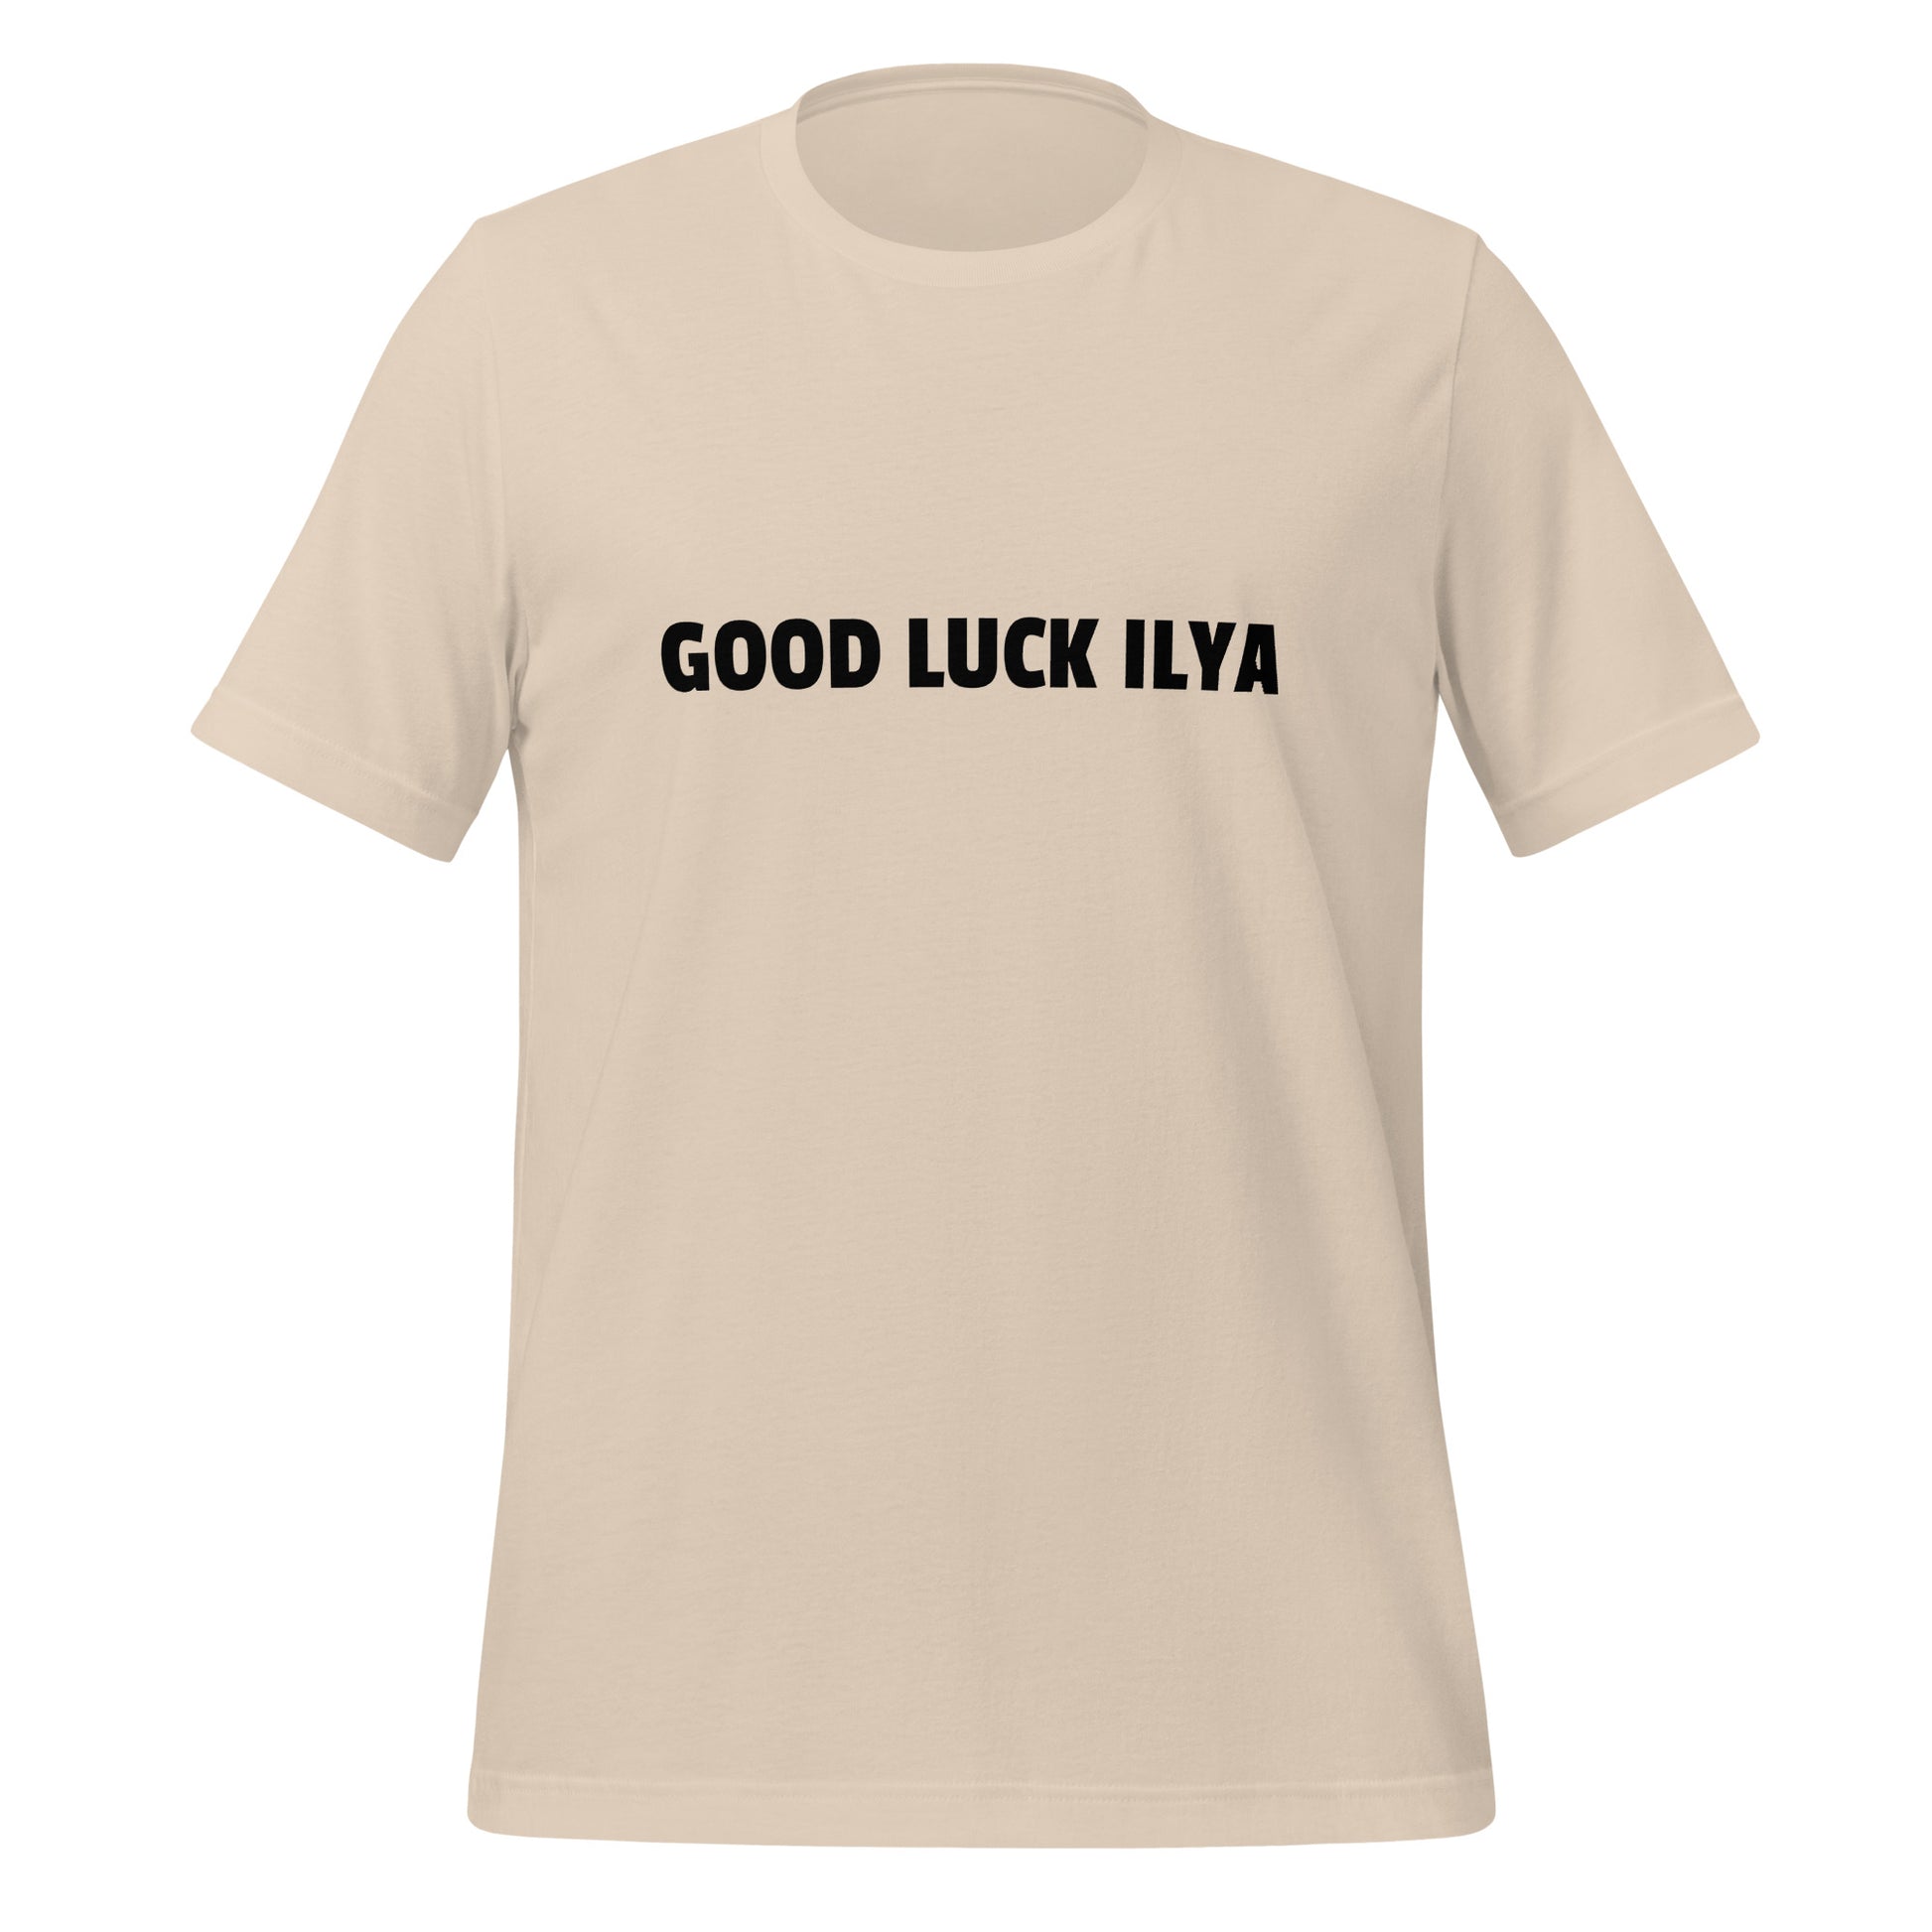 GOOD LUCK ILYA T - Shirt (unisex) - Soft Cream - AI Store